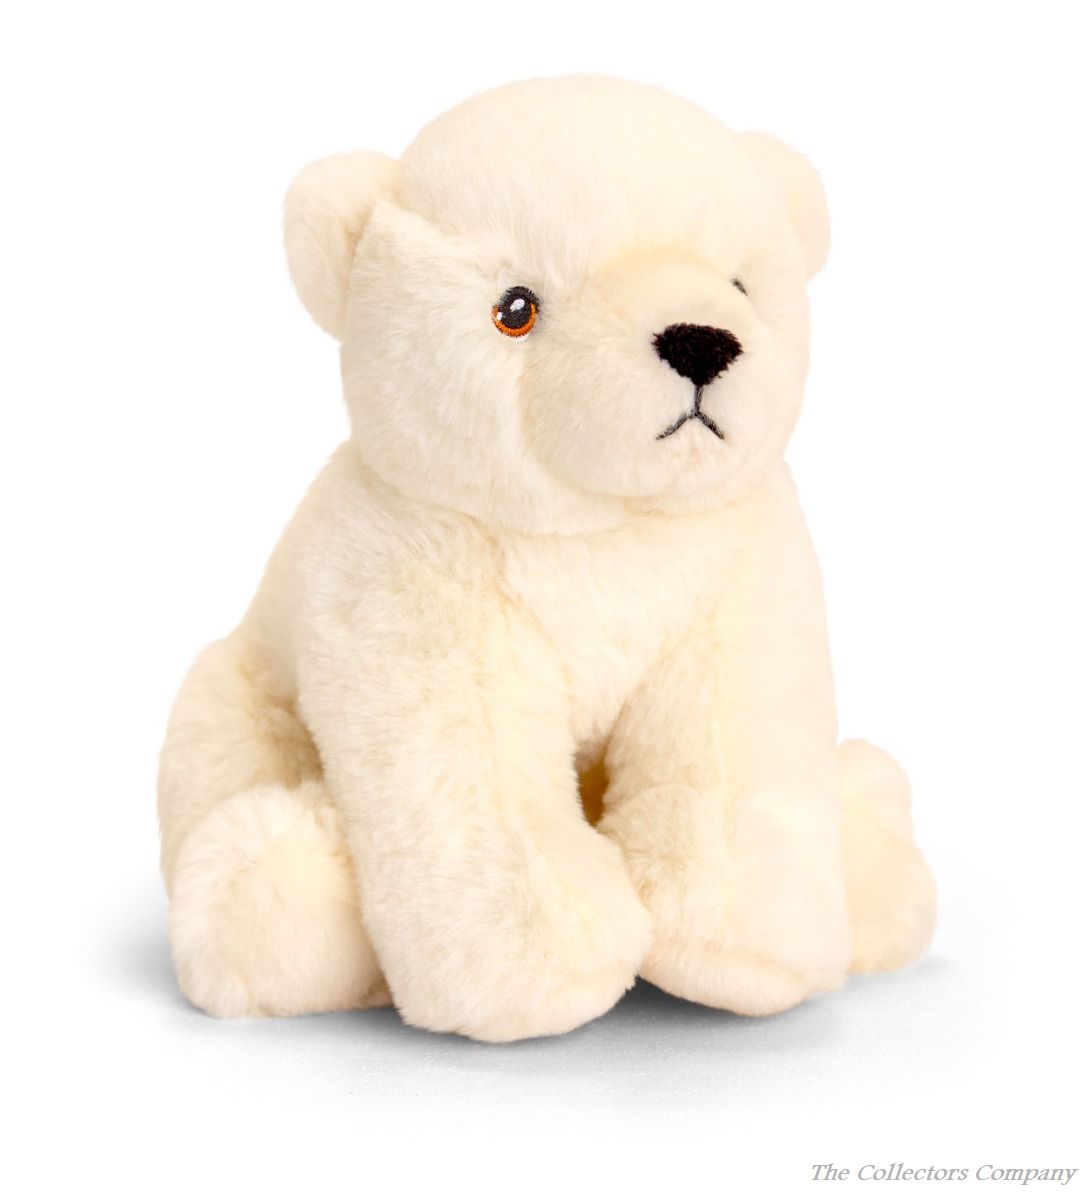 Keeleco Polar Bear Soft Toy SE6120